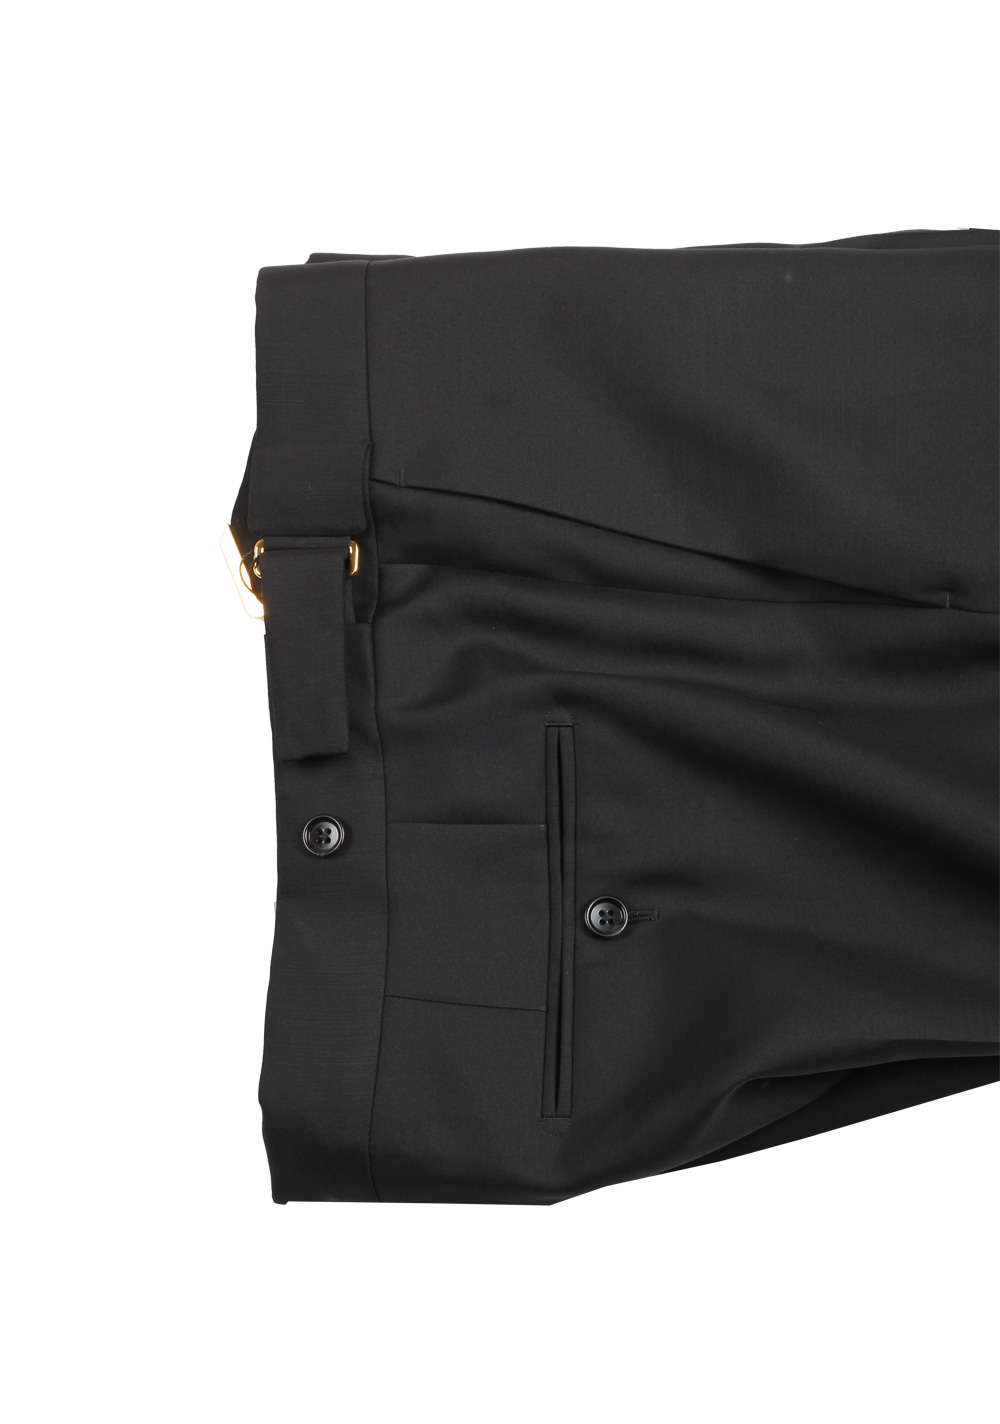 TOM FORD New Spencer Solid Black Suit Size 46 / 36R U.S. | Costume Limité